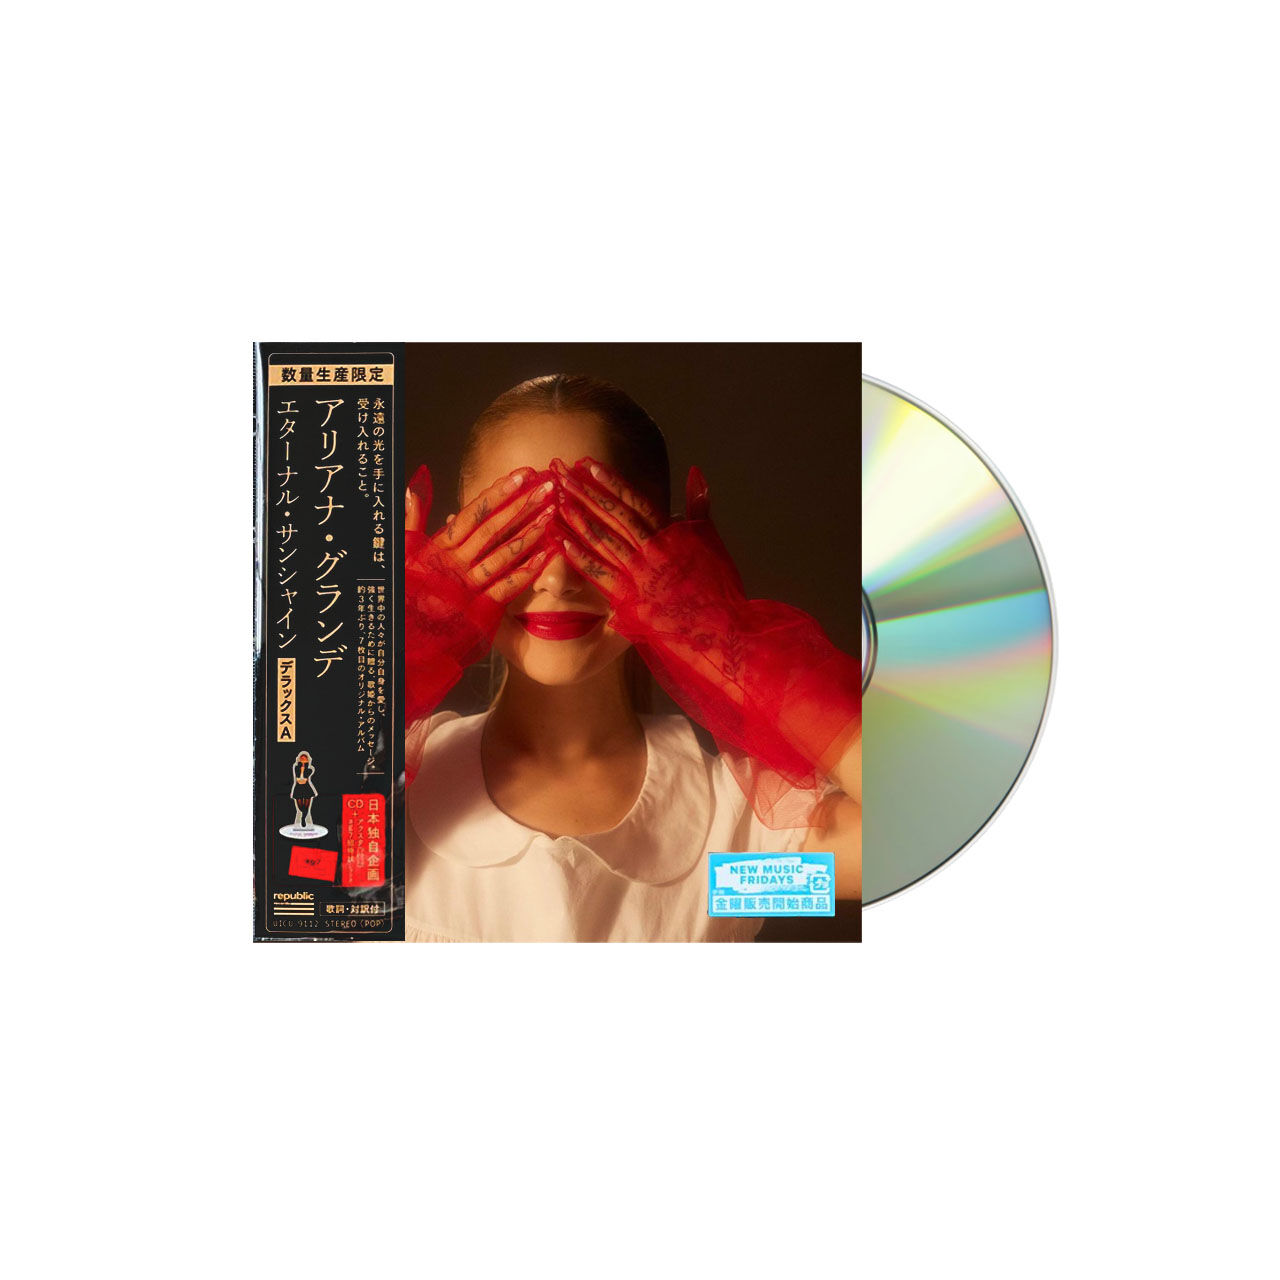 ARIANA GRANDE Eternal Sunshine Deluxe Cover A Jewel Case CD JP